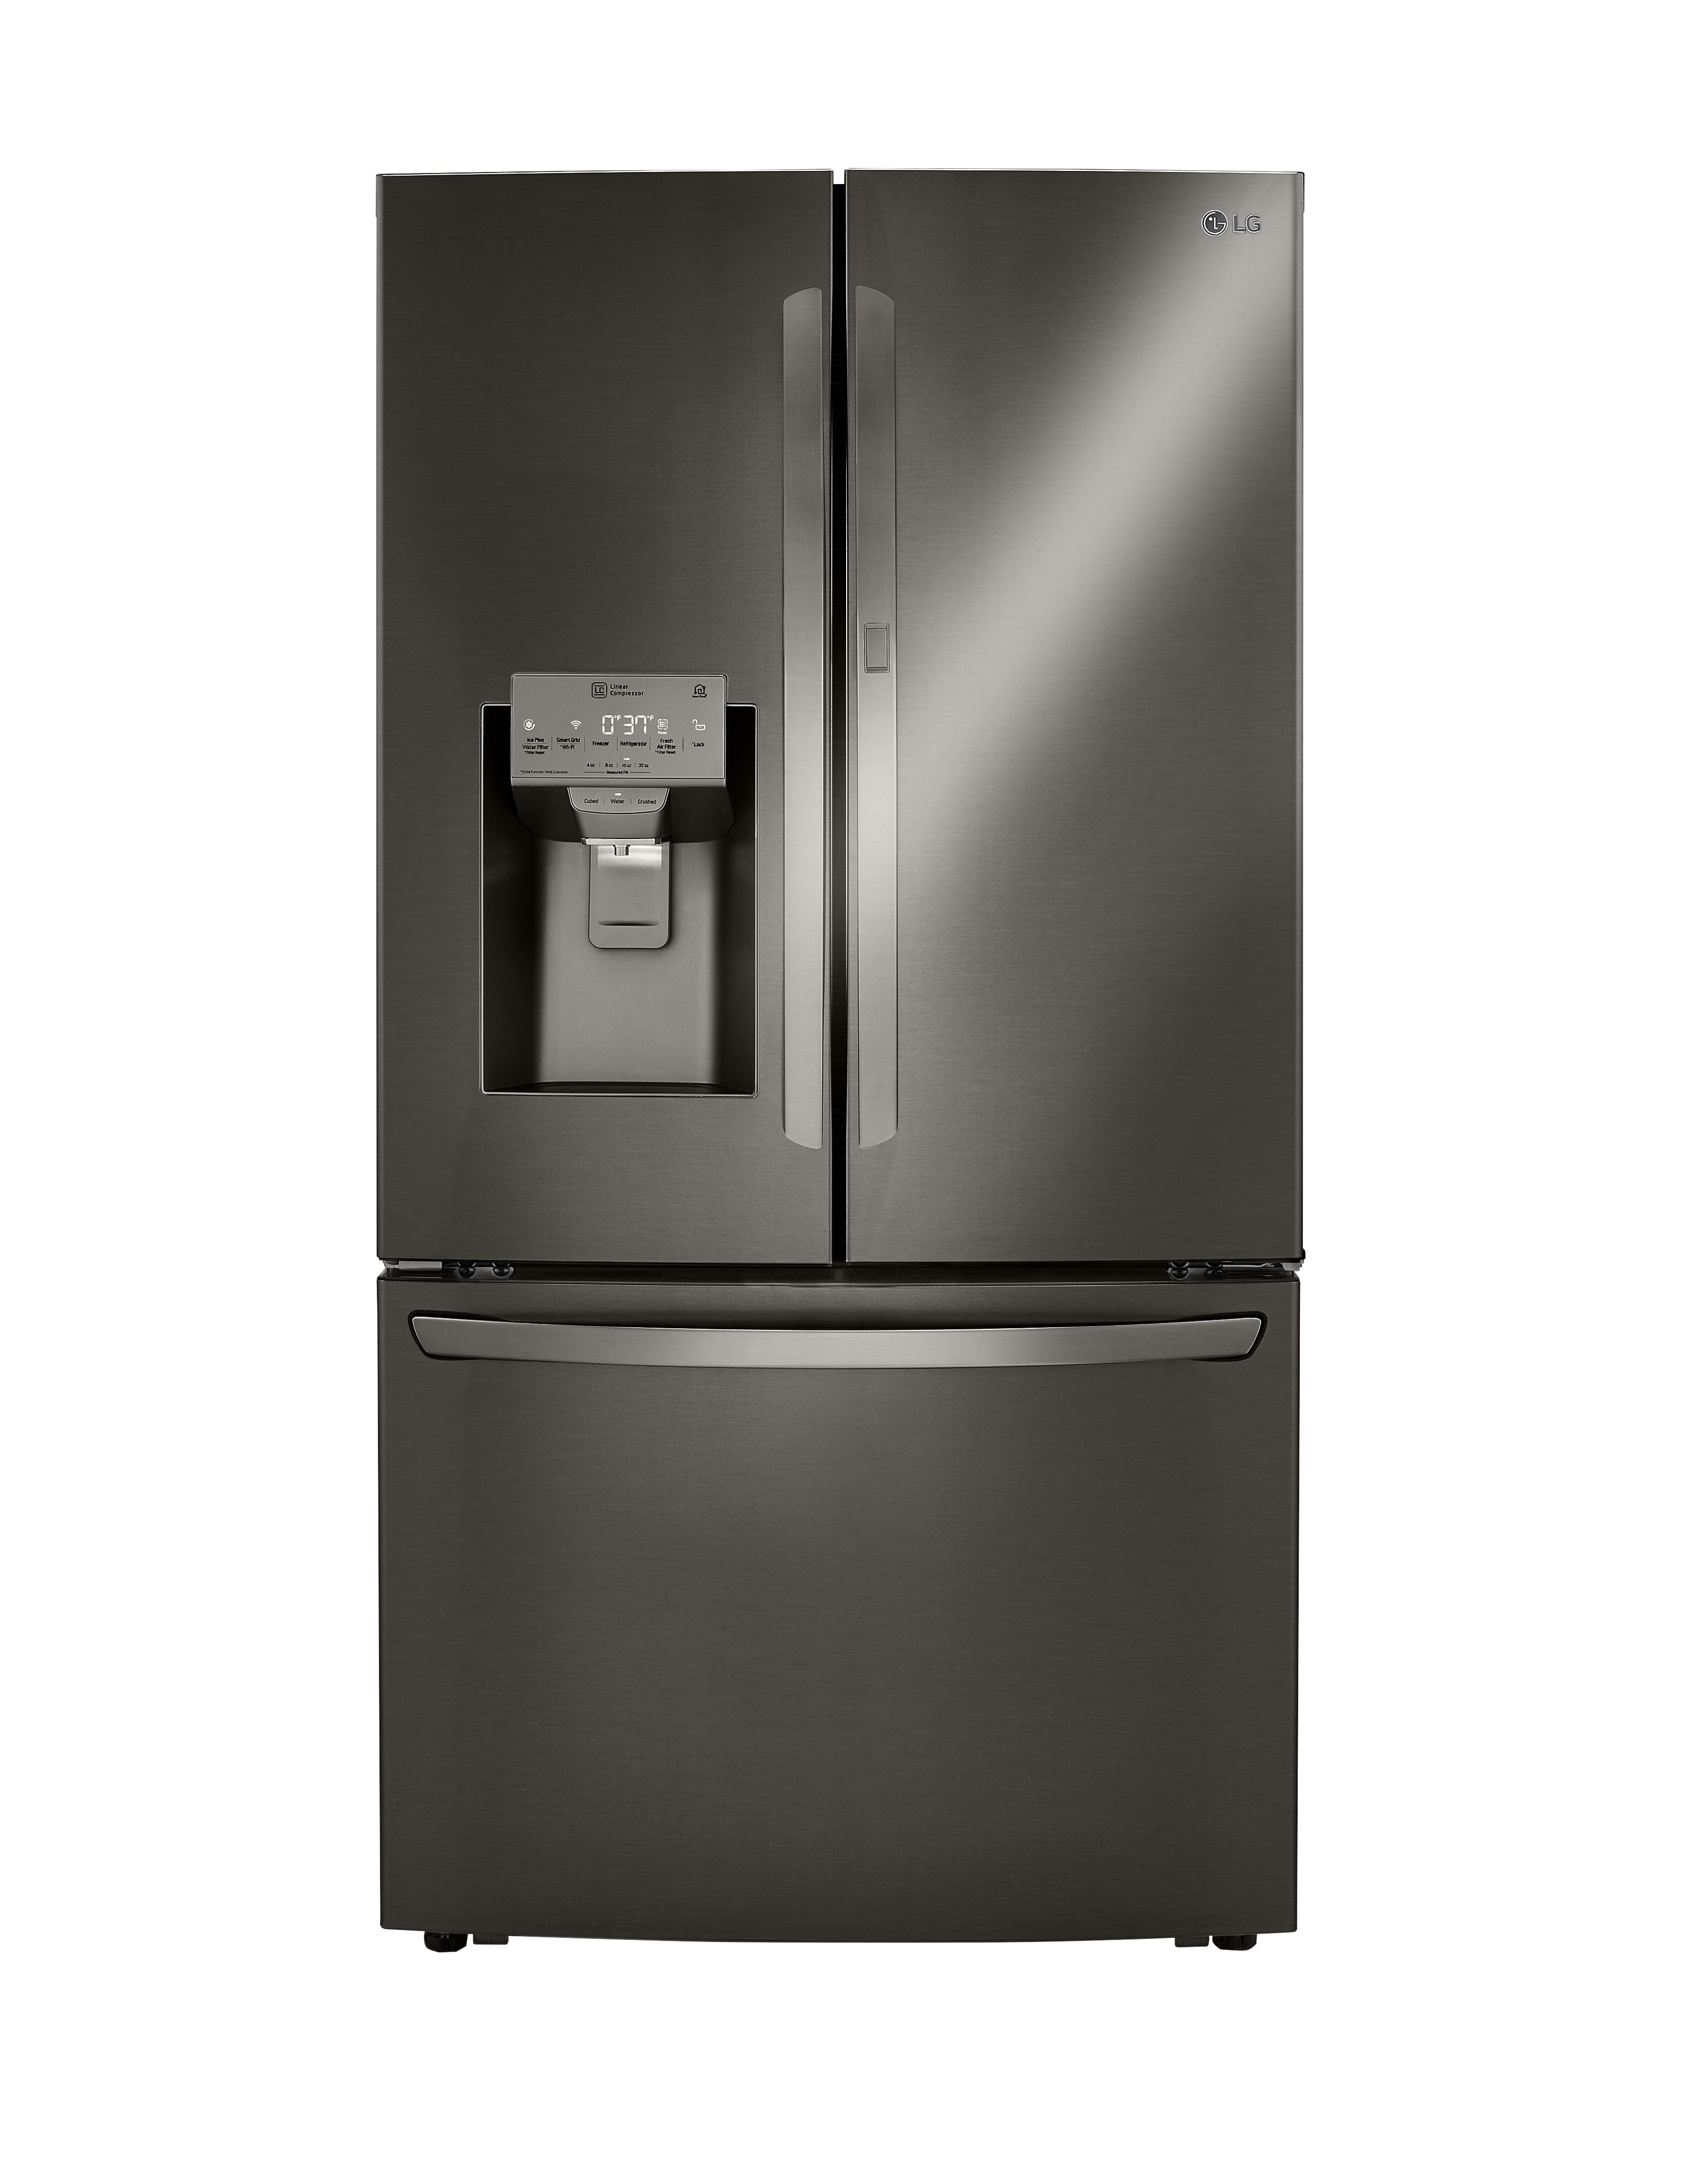 Front view of an LG three-door refrigerator with a door-ice maker